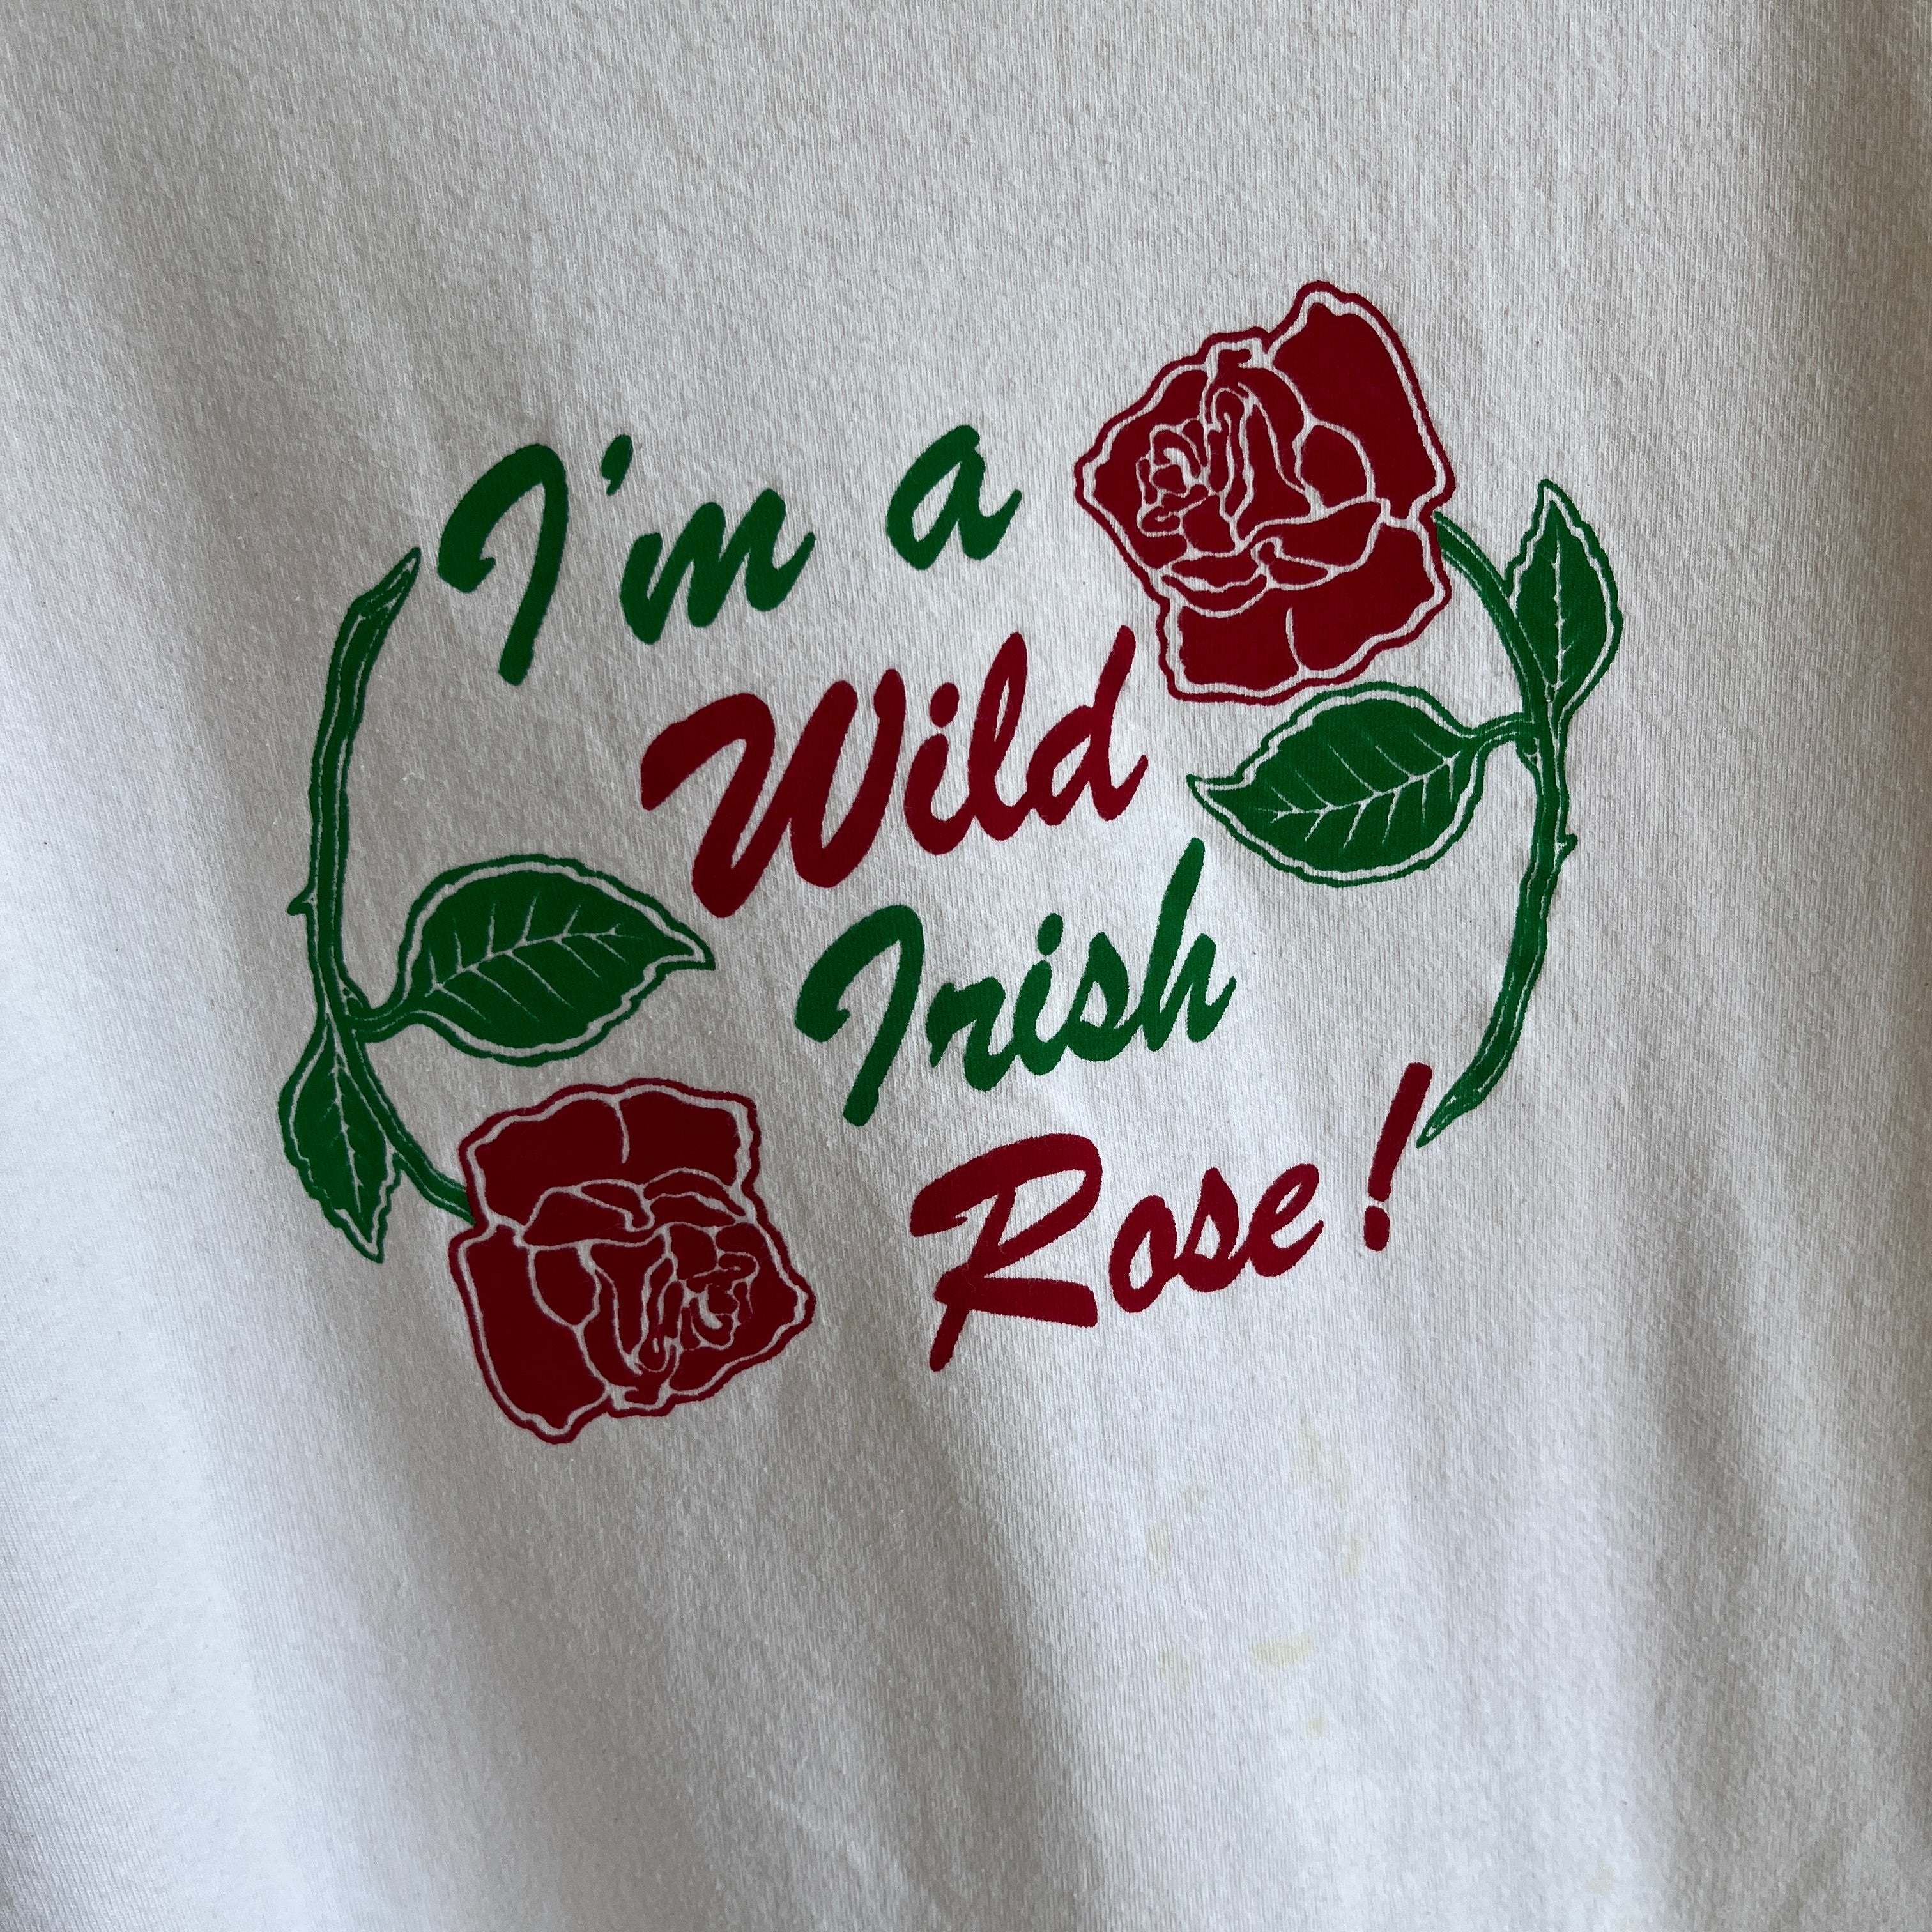 1980s I'm a Wild Irish Rose T-Shirt